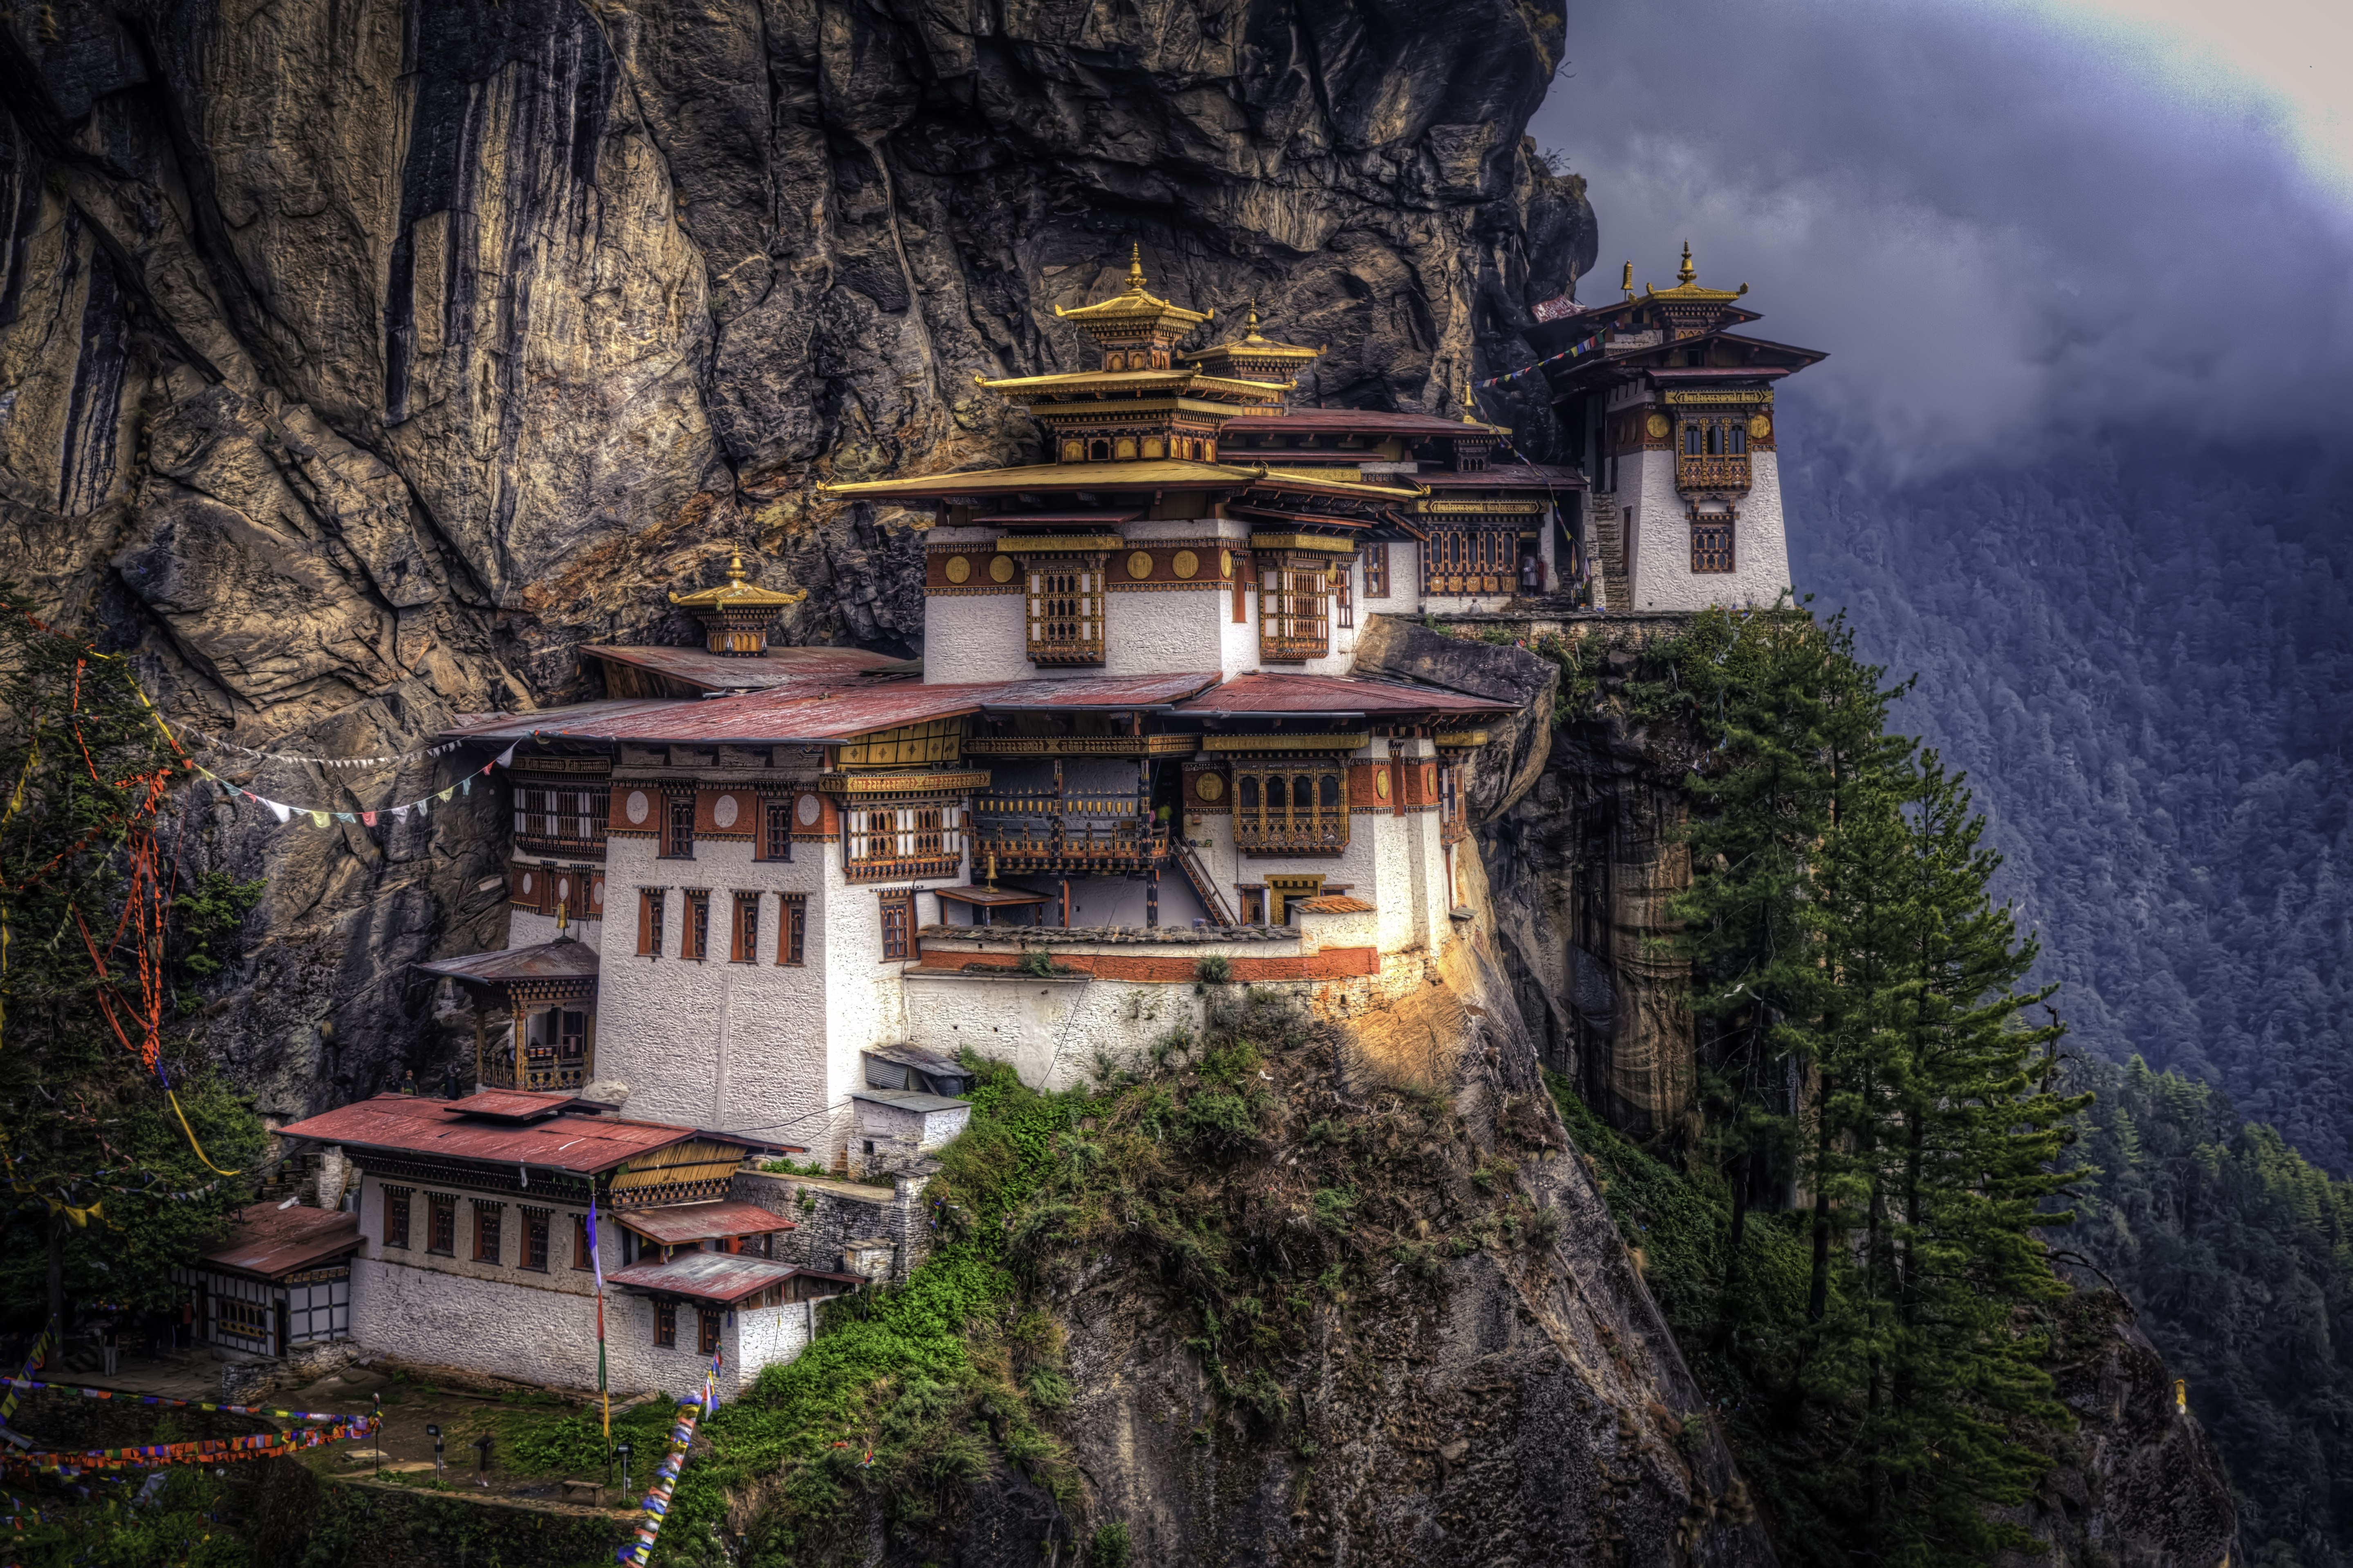 The Tiger's Nest Monastery